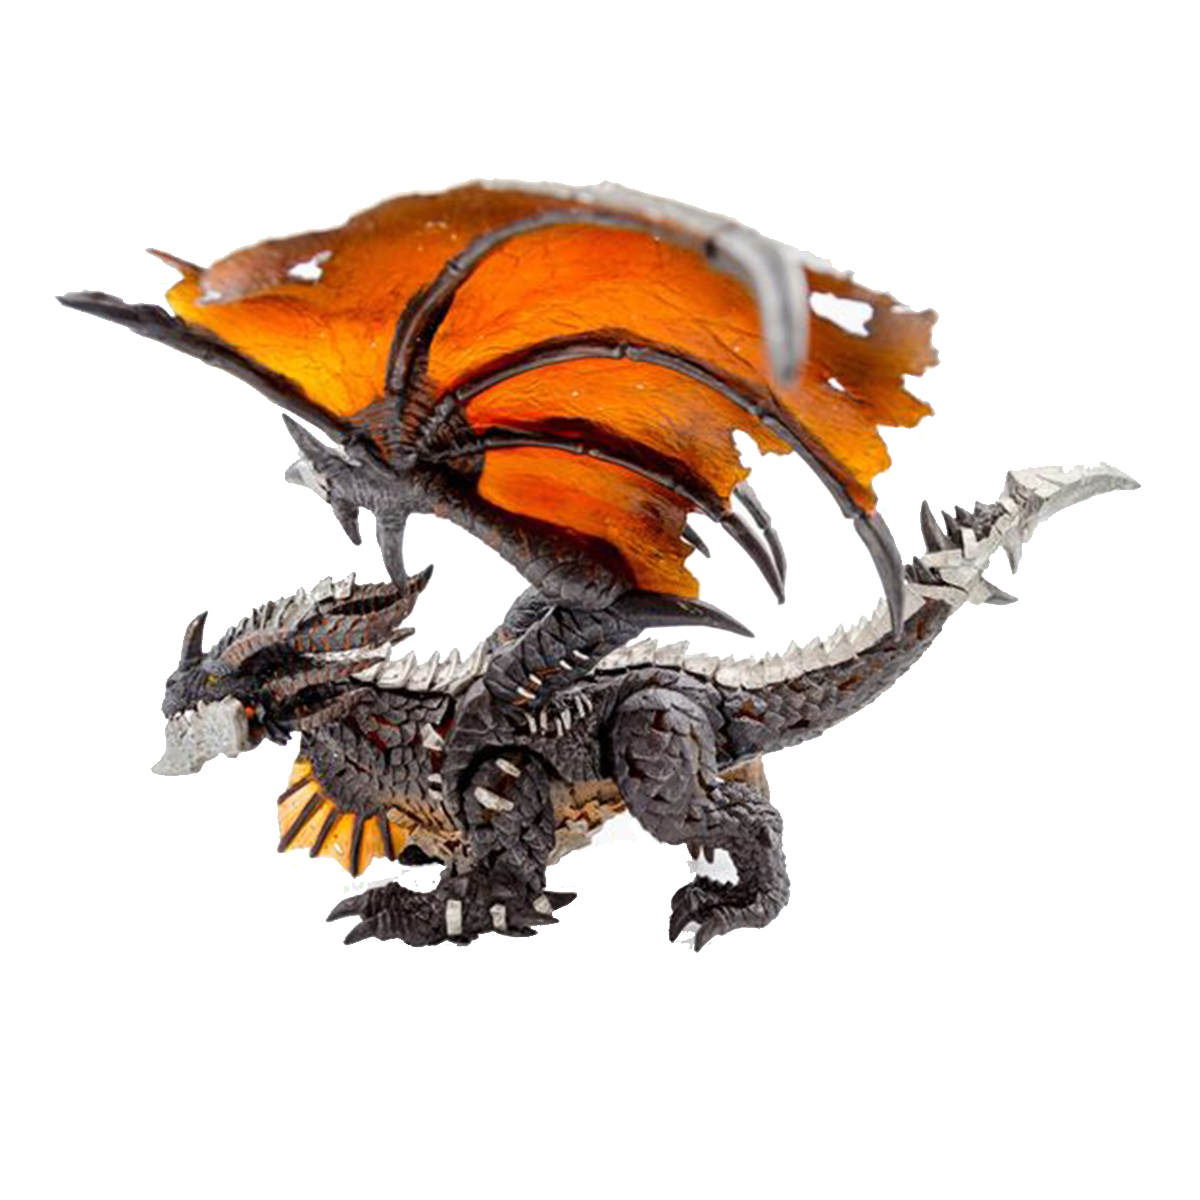 اکشن فیگور بلیزارد.پلاس مدل اژدها Deathwing World of Warcraft Limited کد 80965